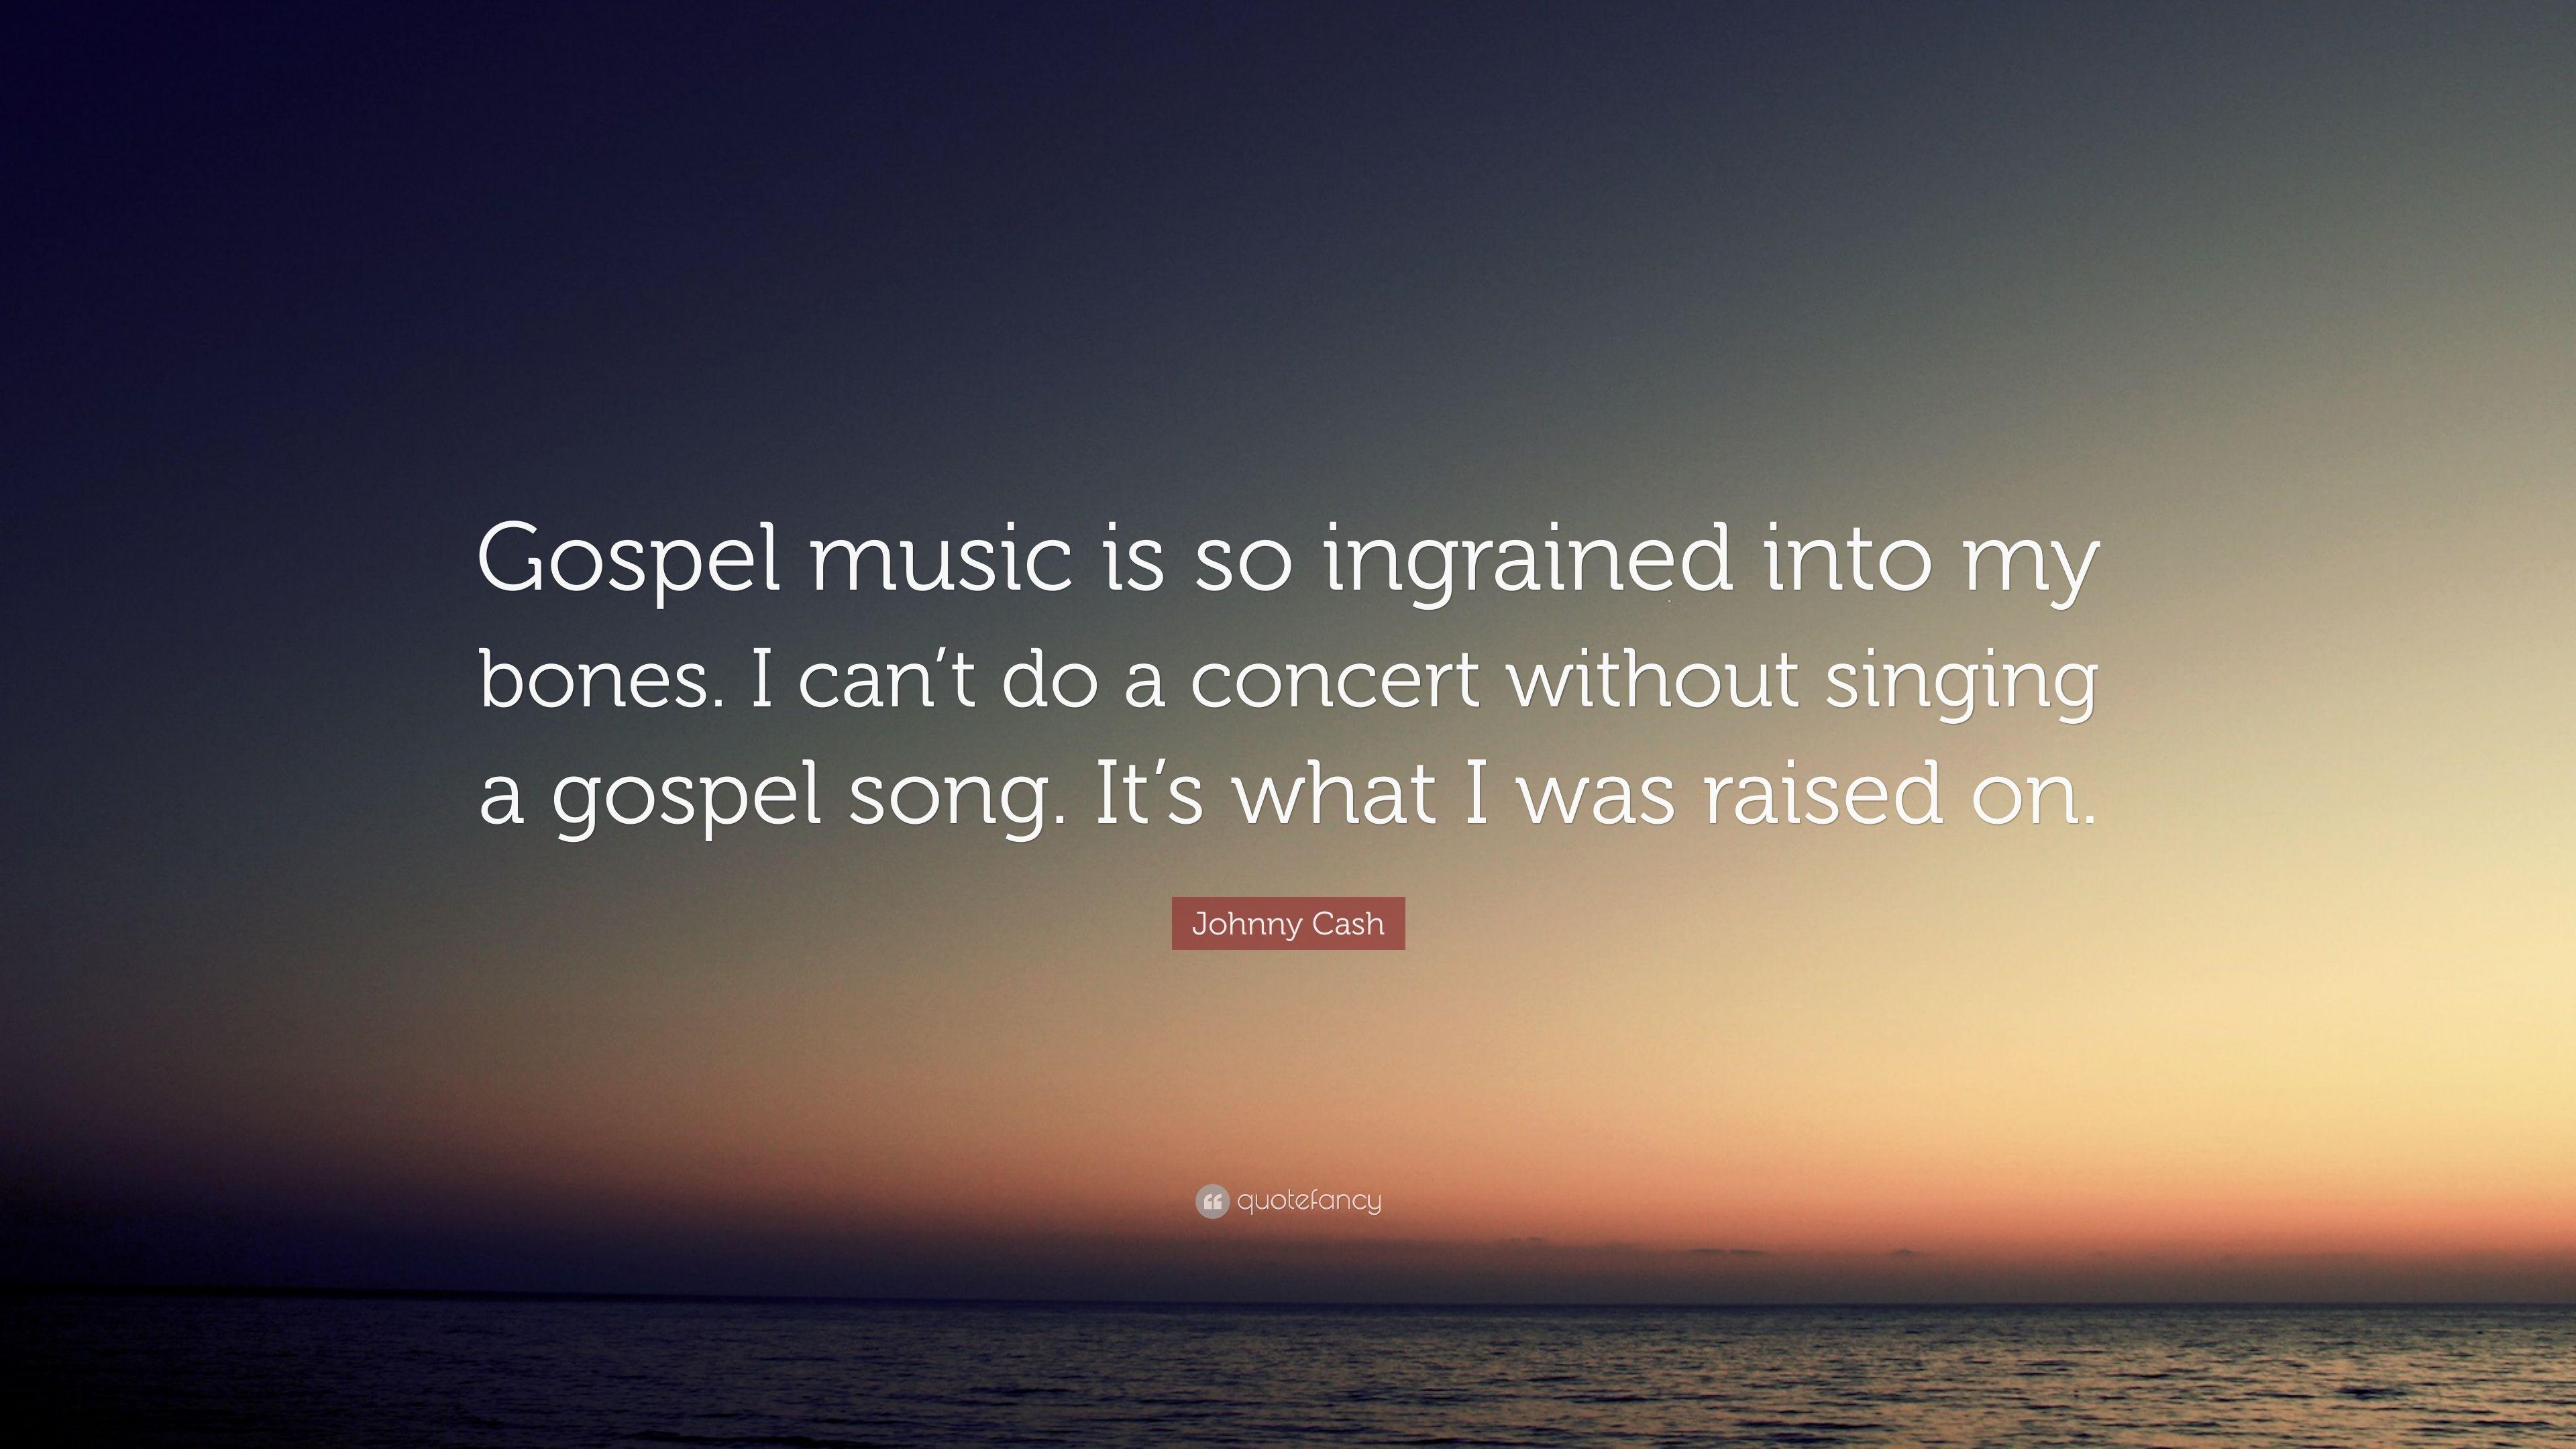 Johnny Cash Quote: “Gospel music is so ingrained into my bones. I